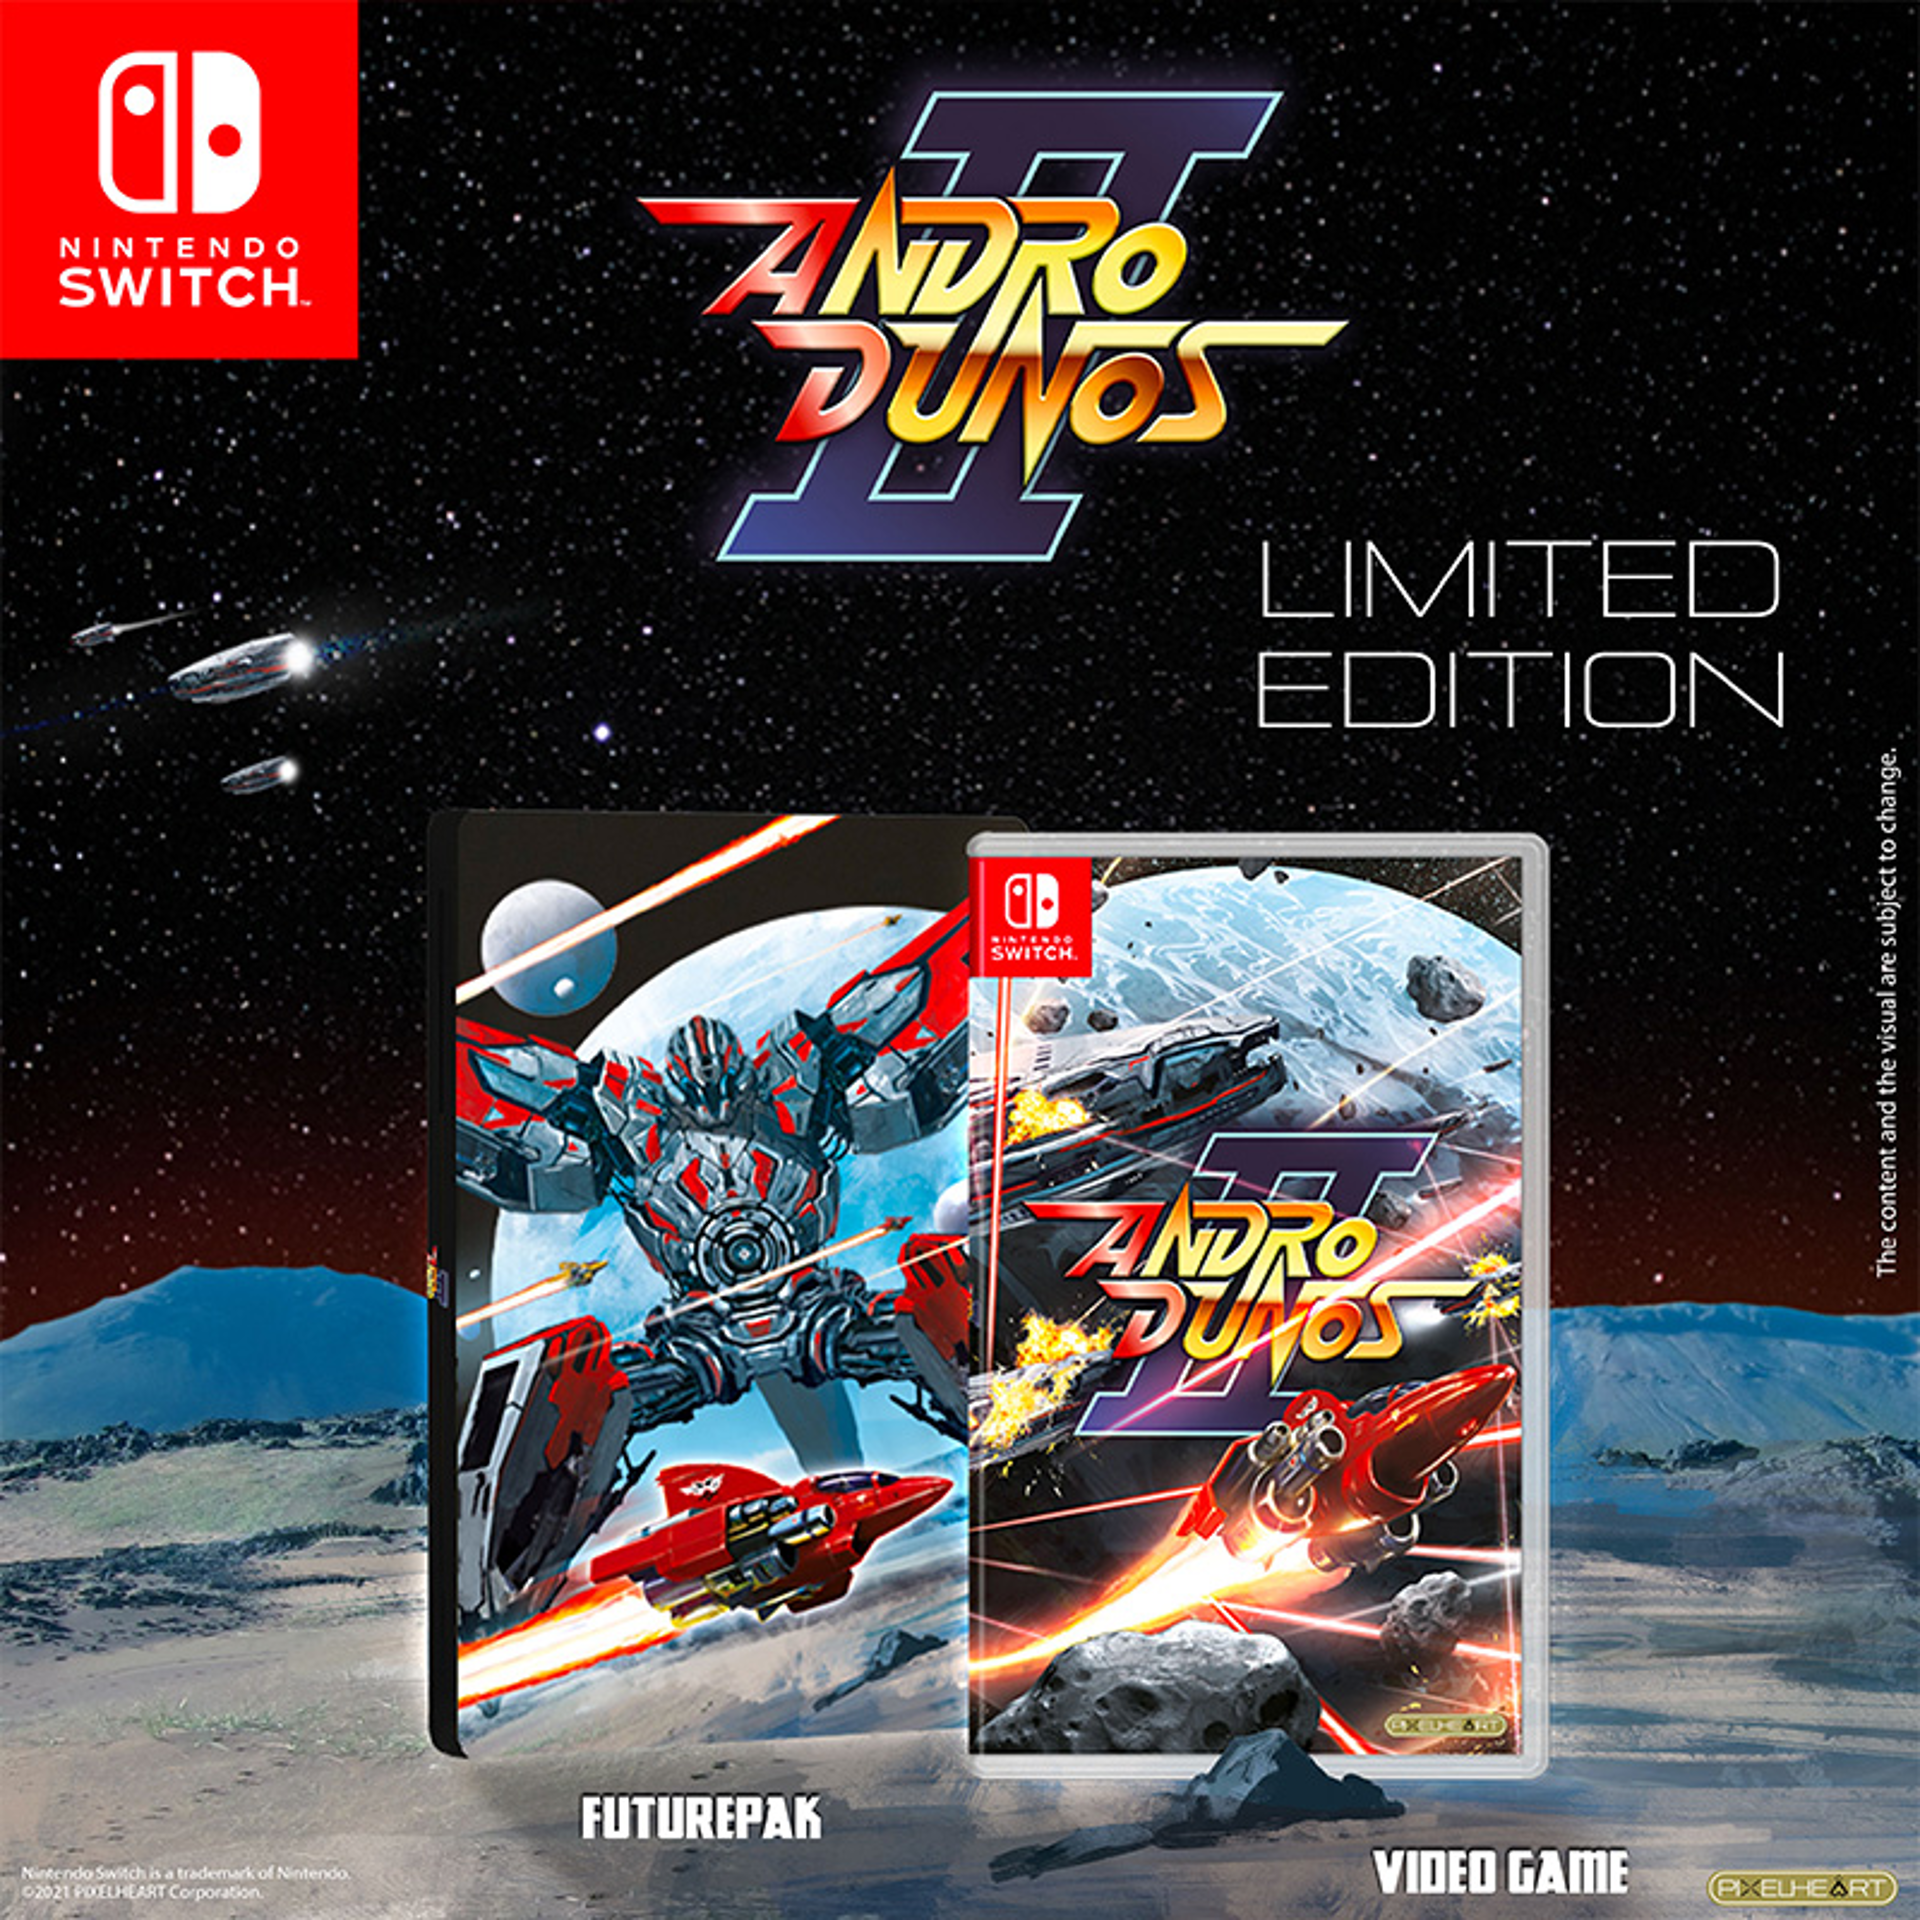 Andro Dunos 2 Limited Edition FuturePak